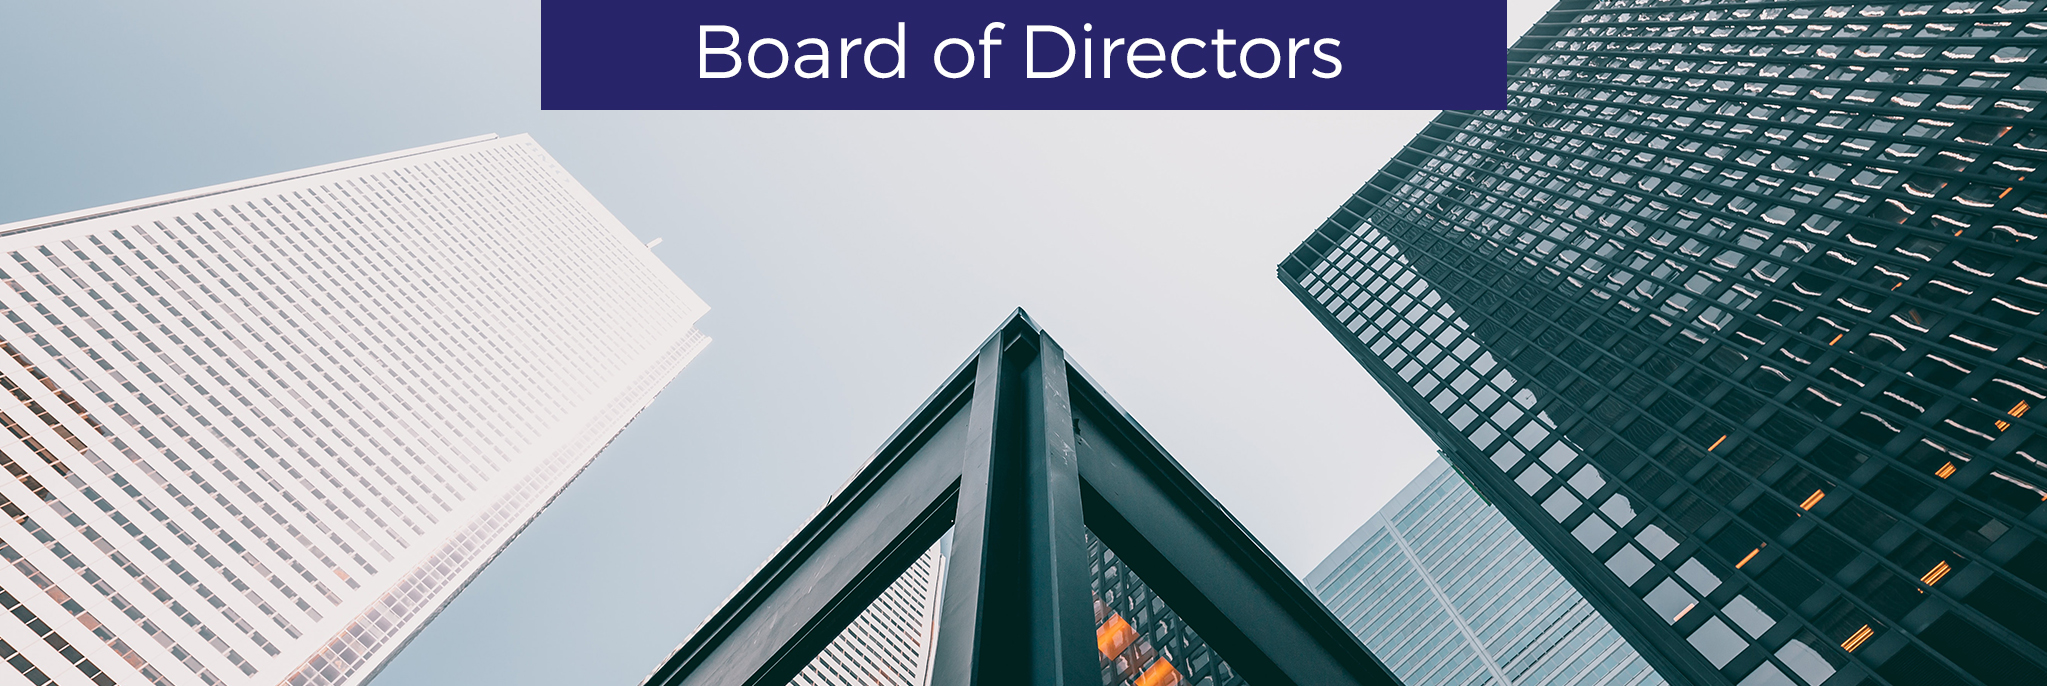 board_of_directors_bn